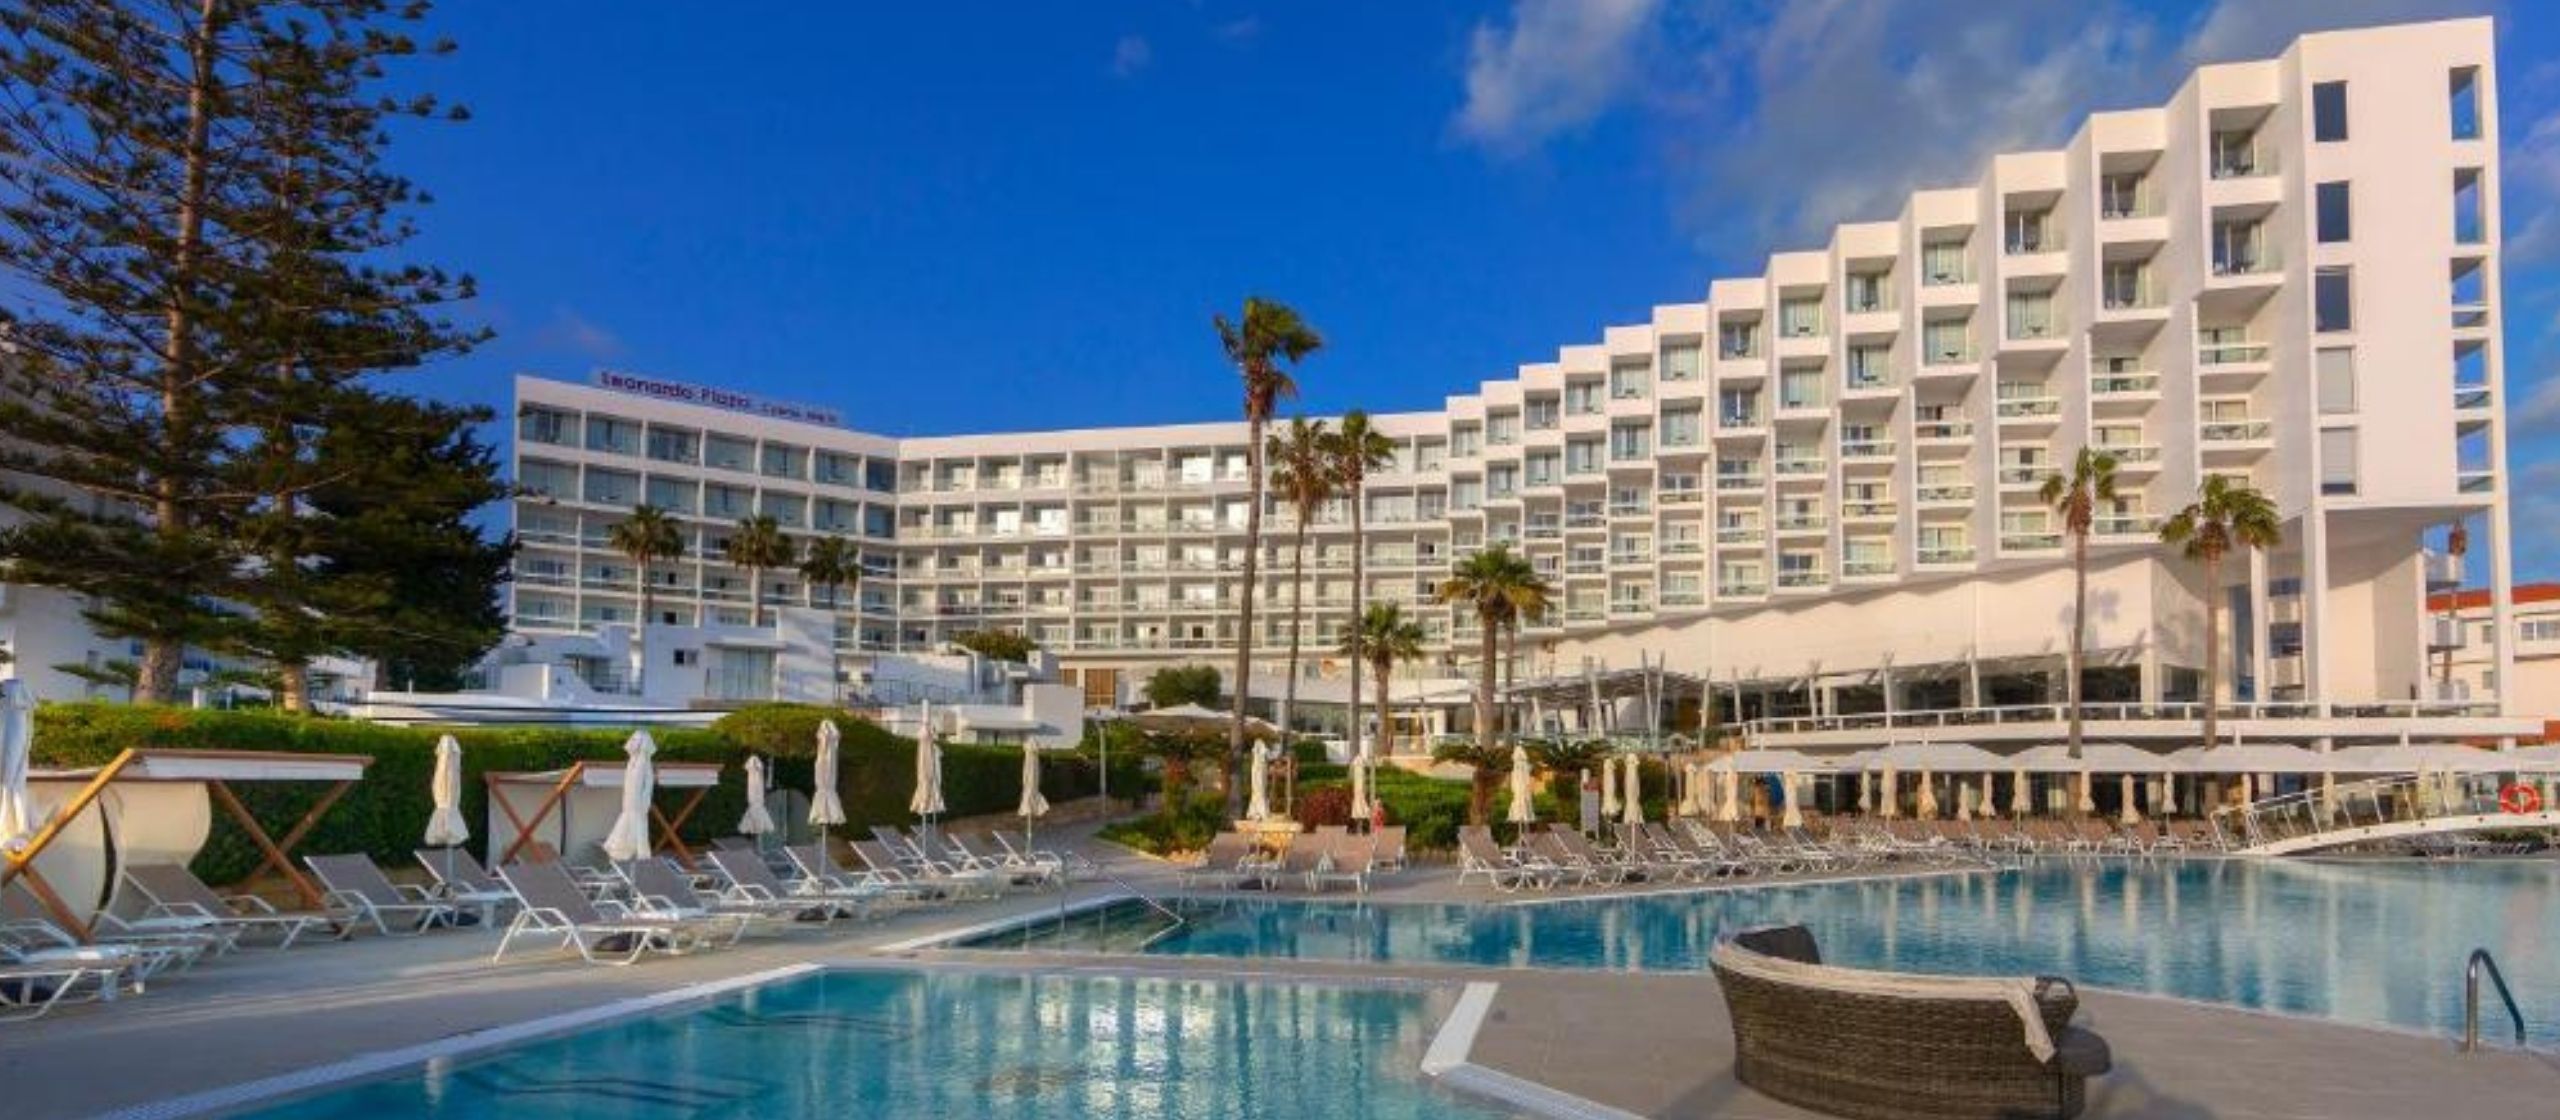 Leonardo Plaza Cypria Maris <br>Beach Hotel & Spa in Cyprus